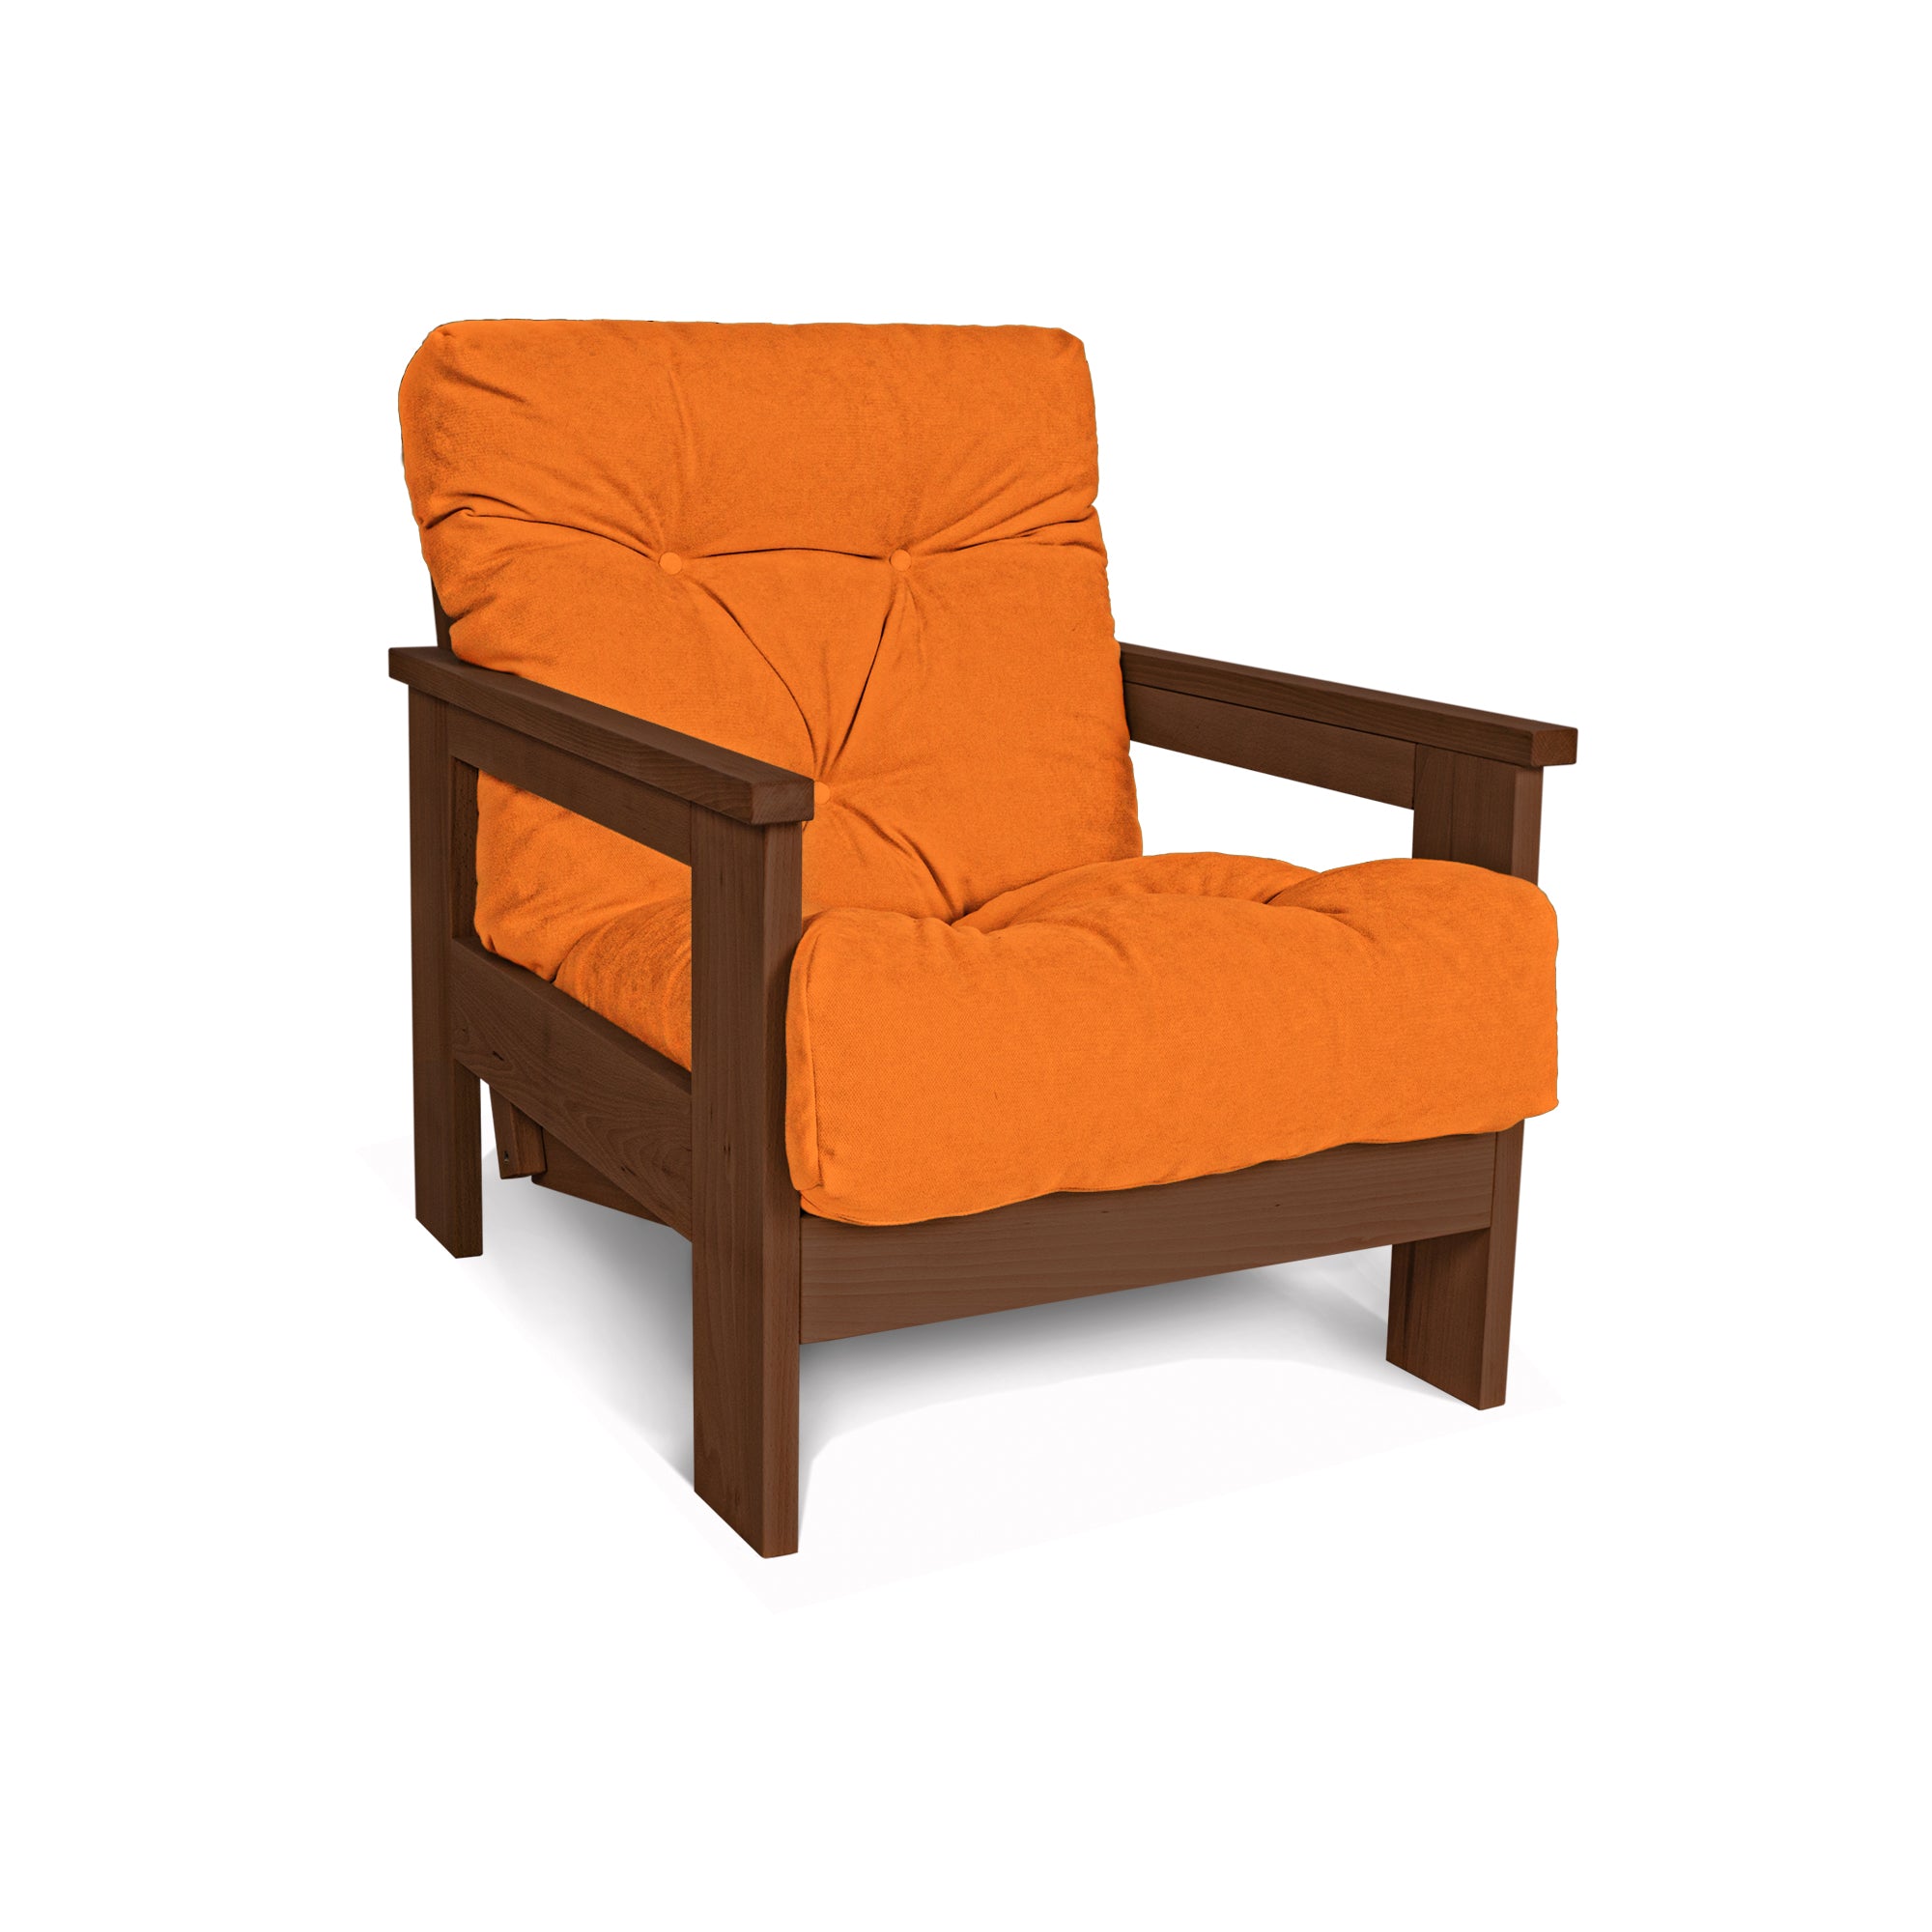 MEXICO Armchair, Beech Wood Frame, Walnut Colour-orange fabric